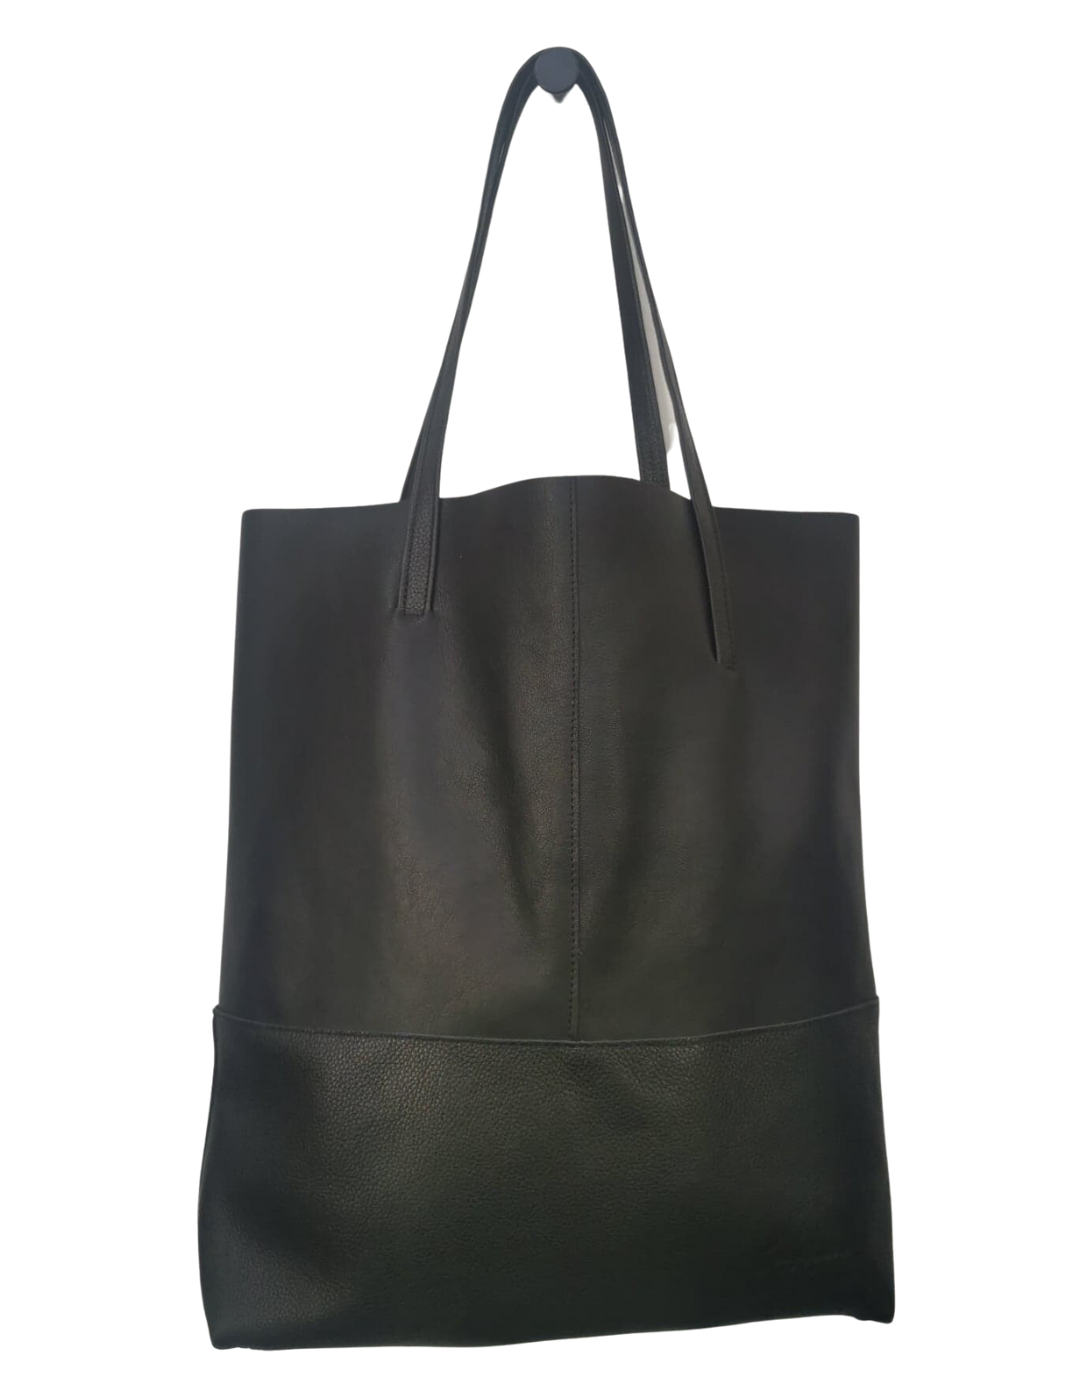 Simply Fab bag, musta nahka